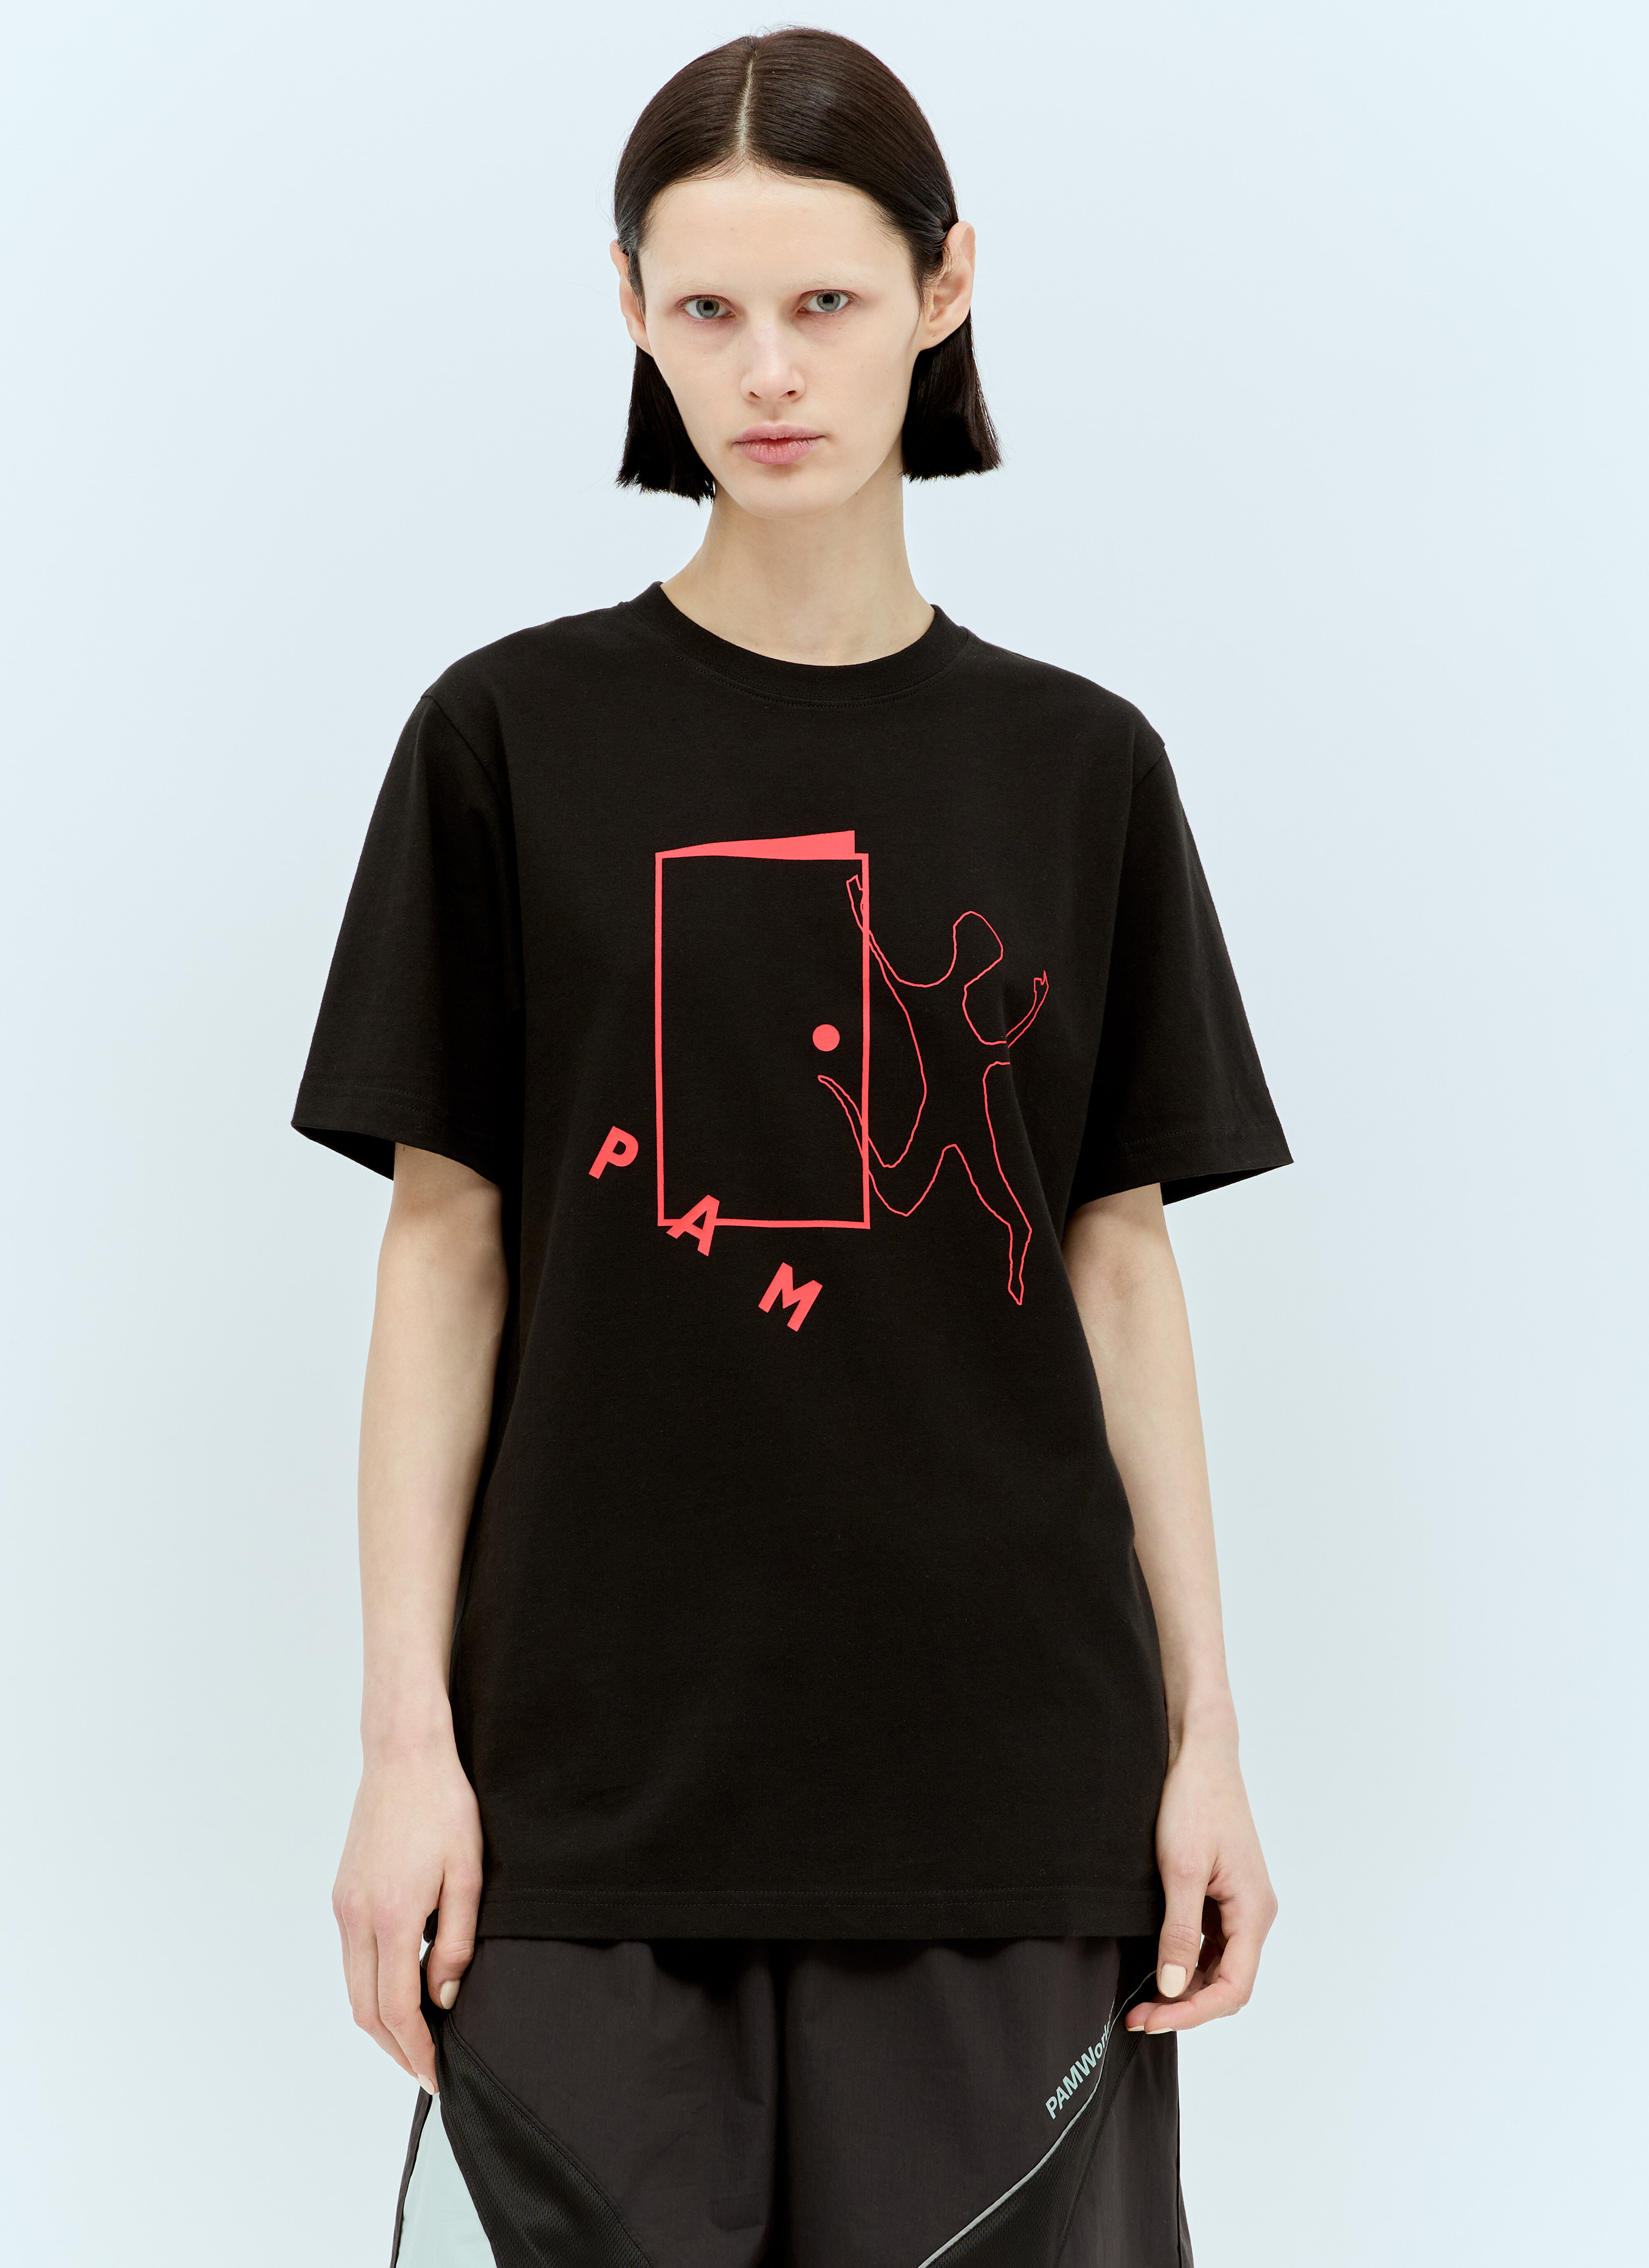 Jean Paul Gaultier x Shayne Oliver Open Doors T-Shirt Black jps0257005